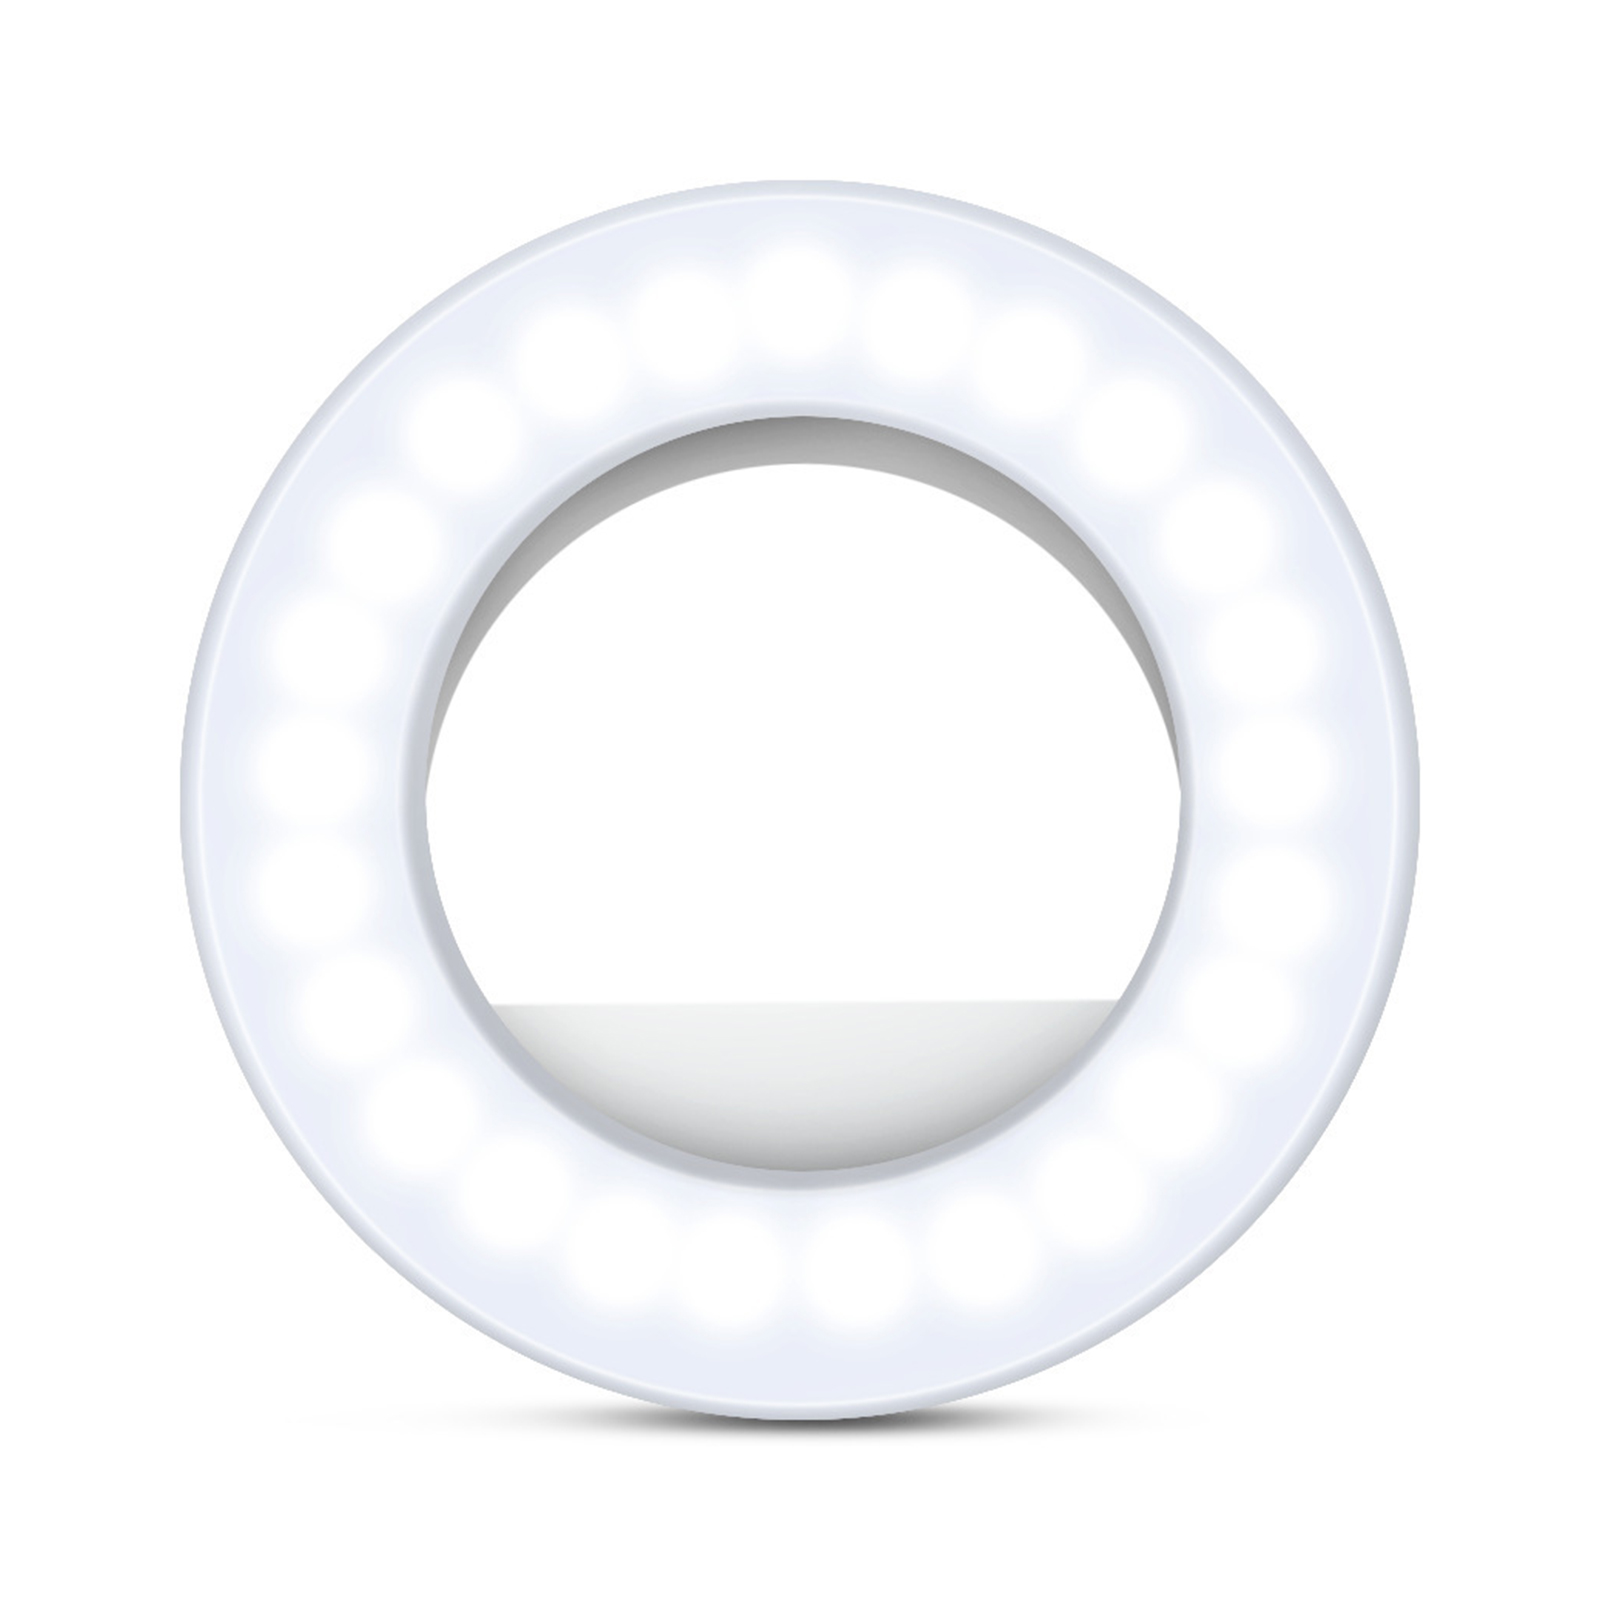 Selfie Ring Light Brightness Adjustable Mobile Phone Led Fill Light Clip On Round Lamp For Smartphones Tablets